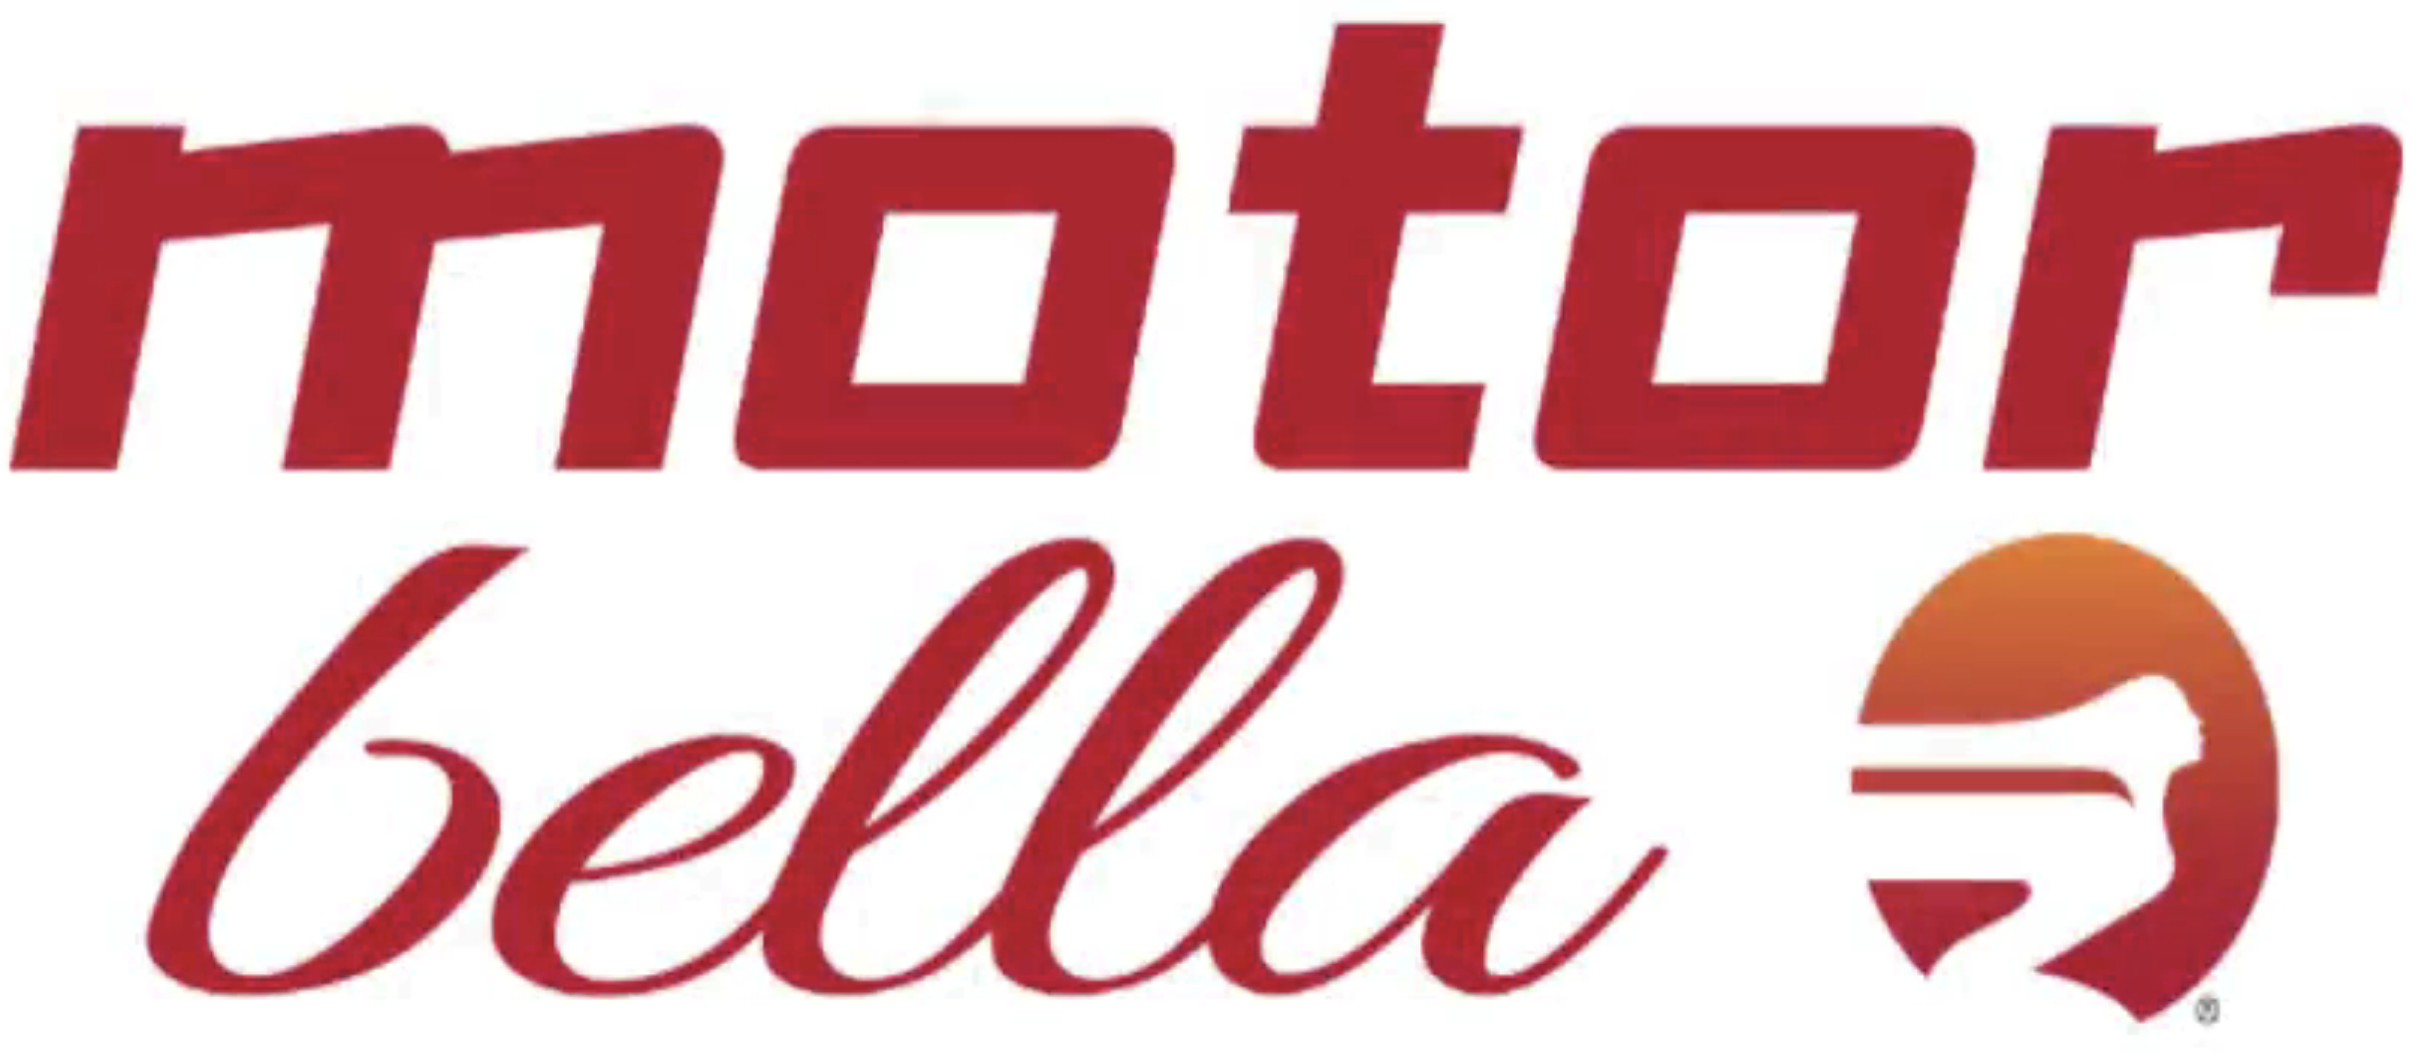 Motor Bella 2021